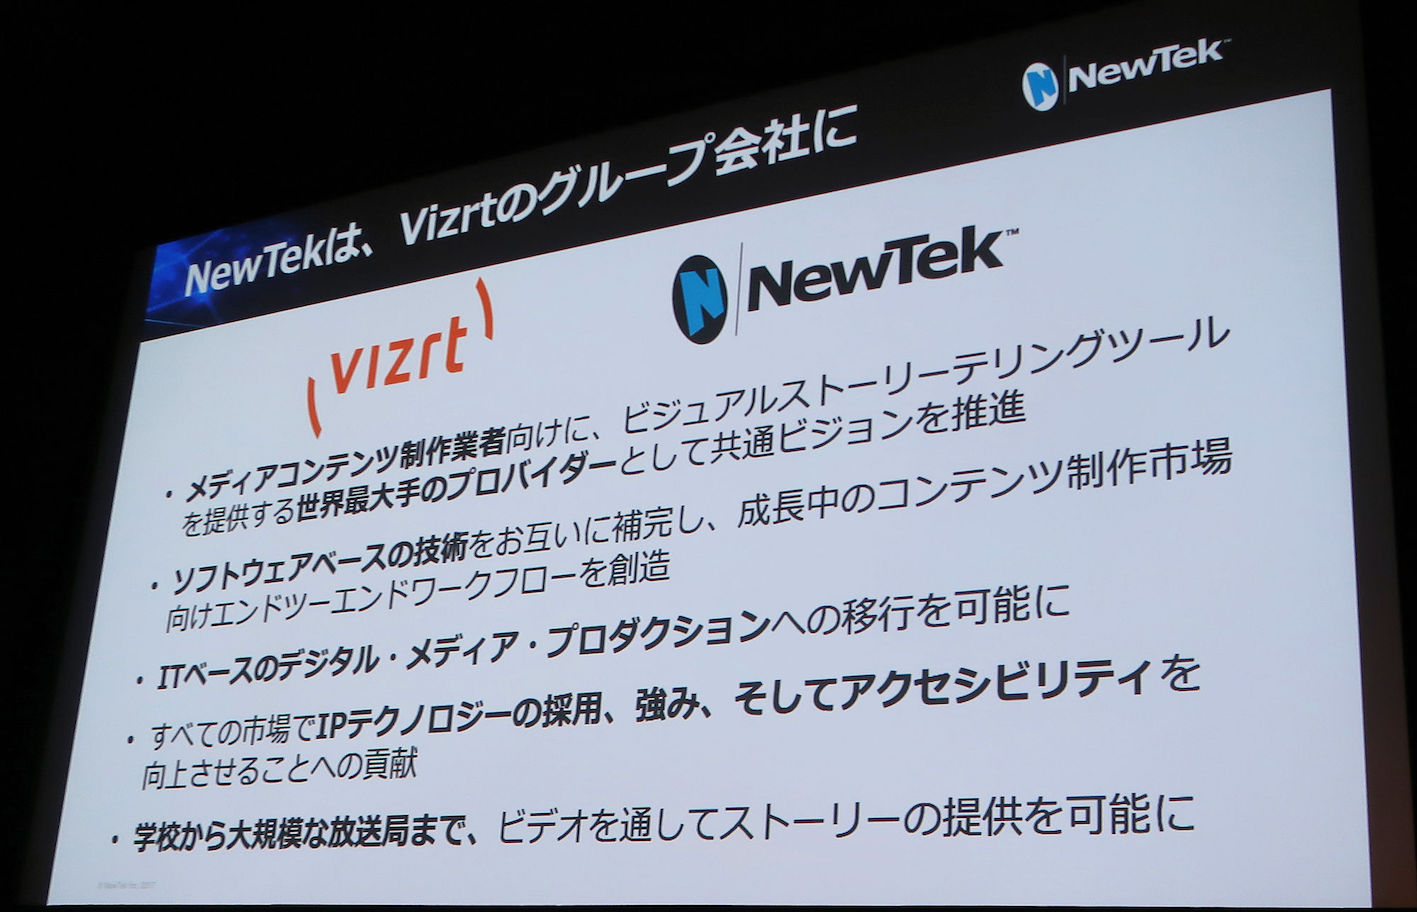 NewTekはVizrt傘下に入っても共通ビジョンを持って事業を継続して展開